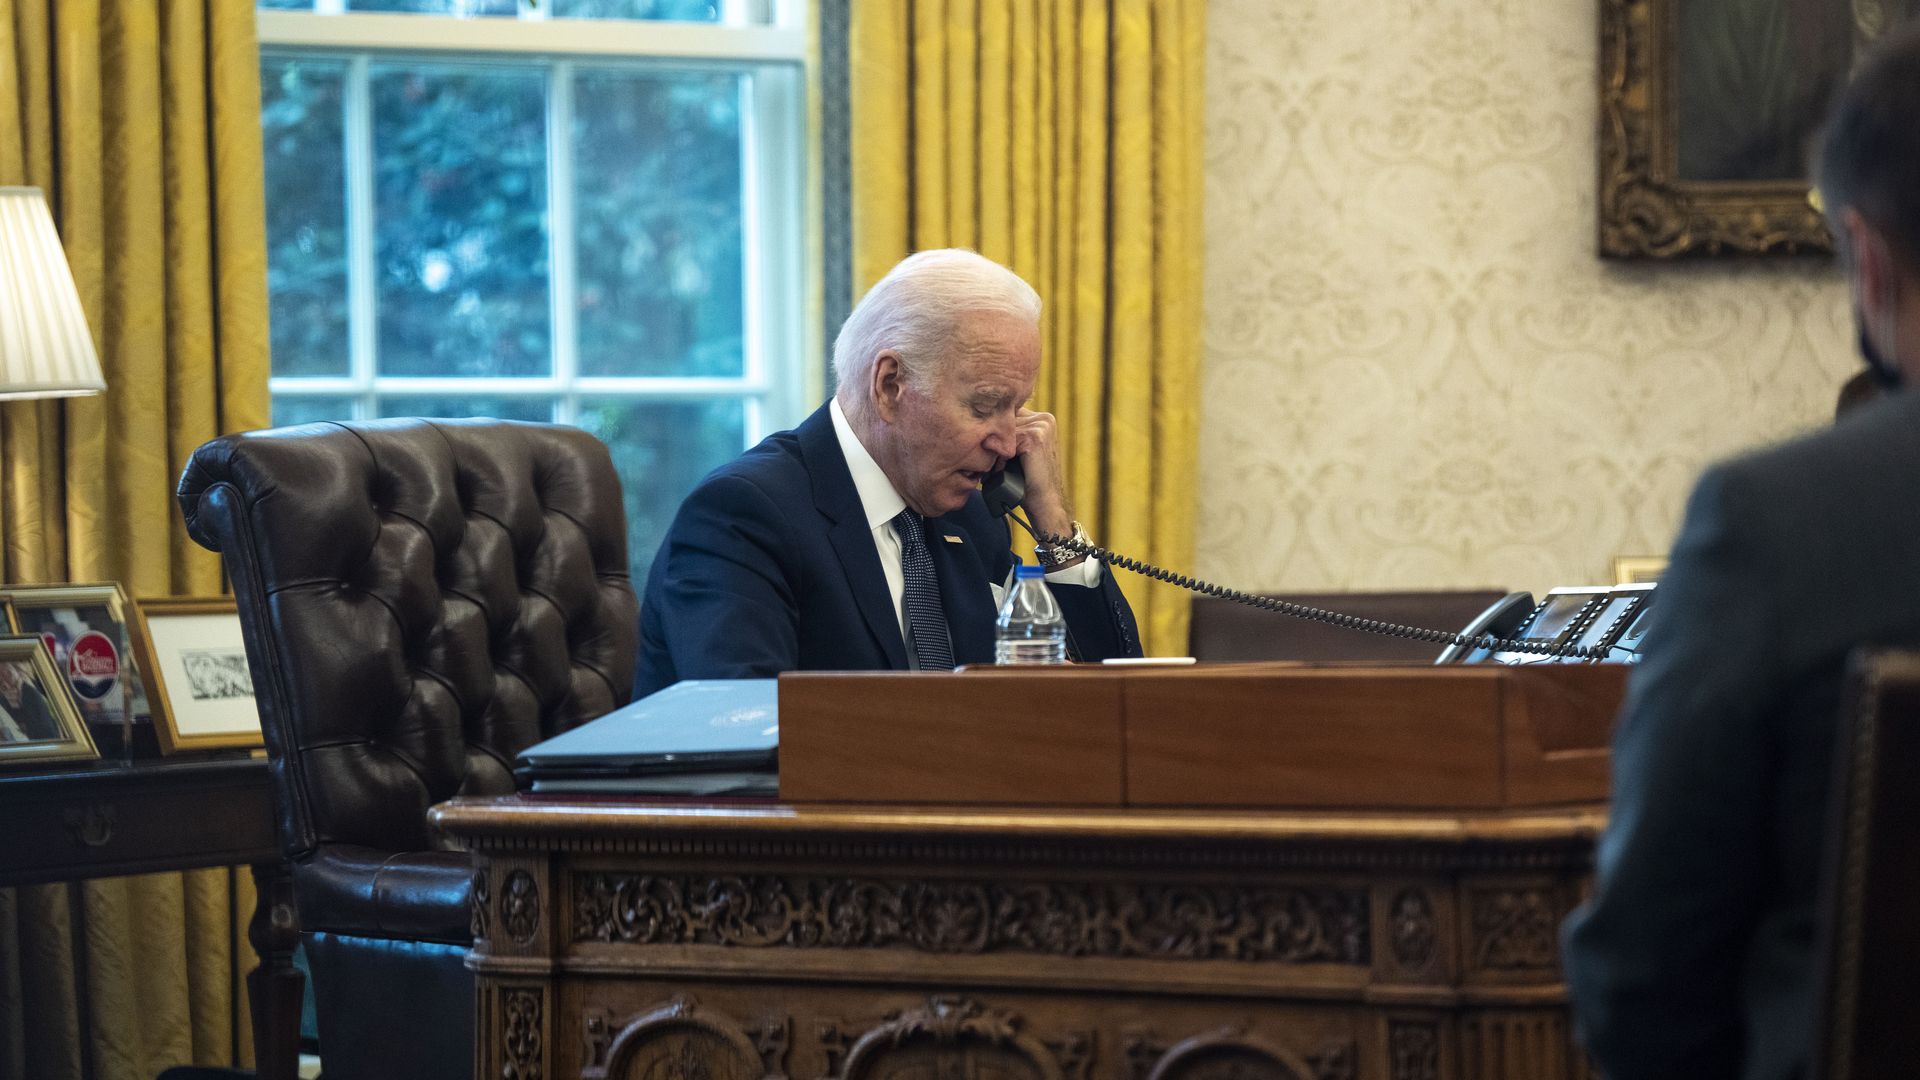 Biden on the phone